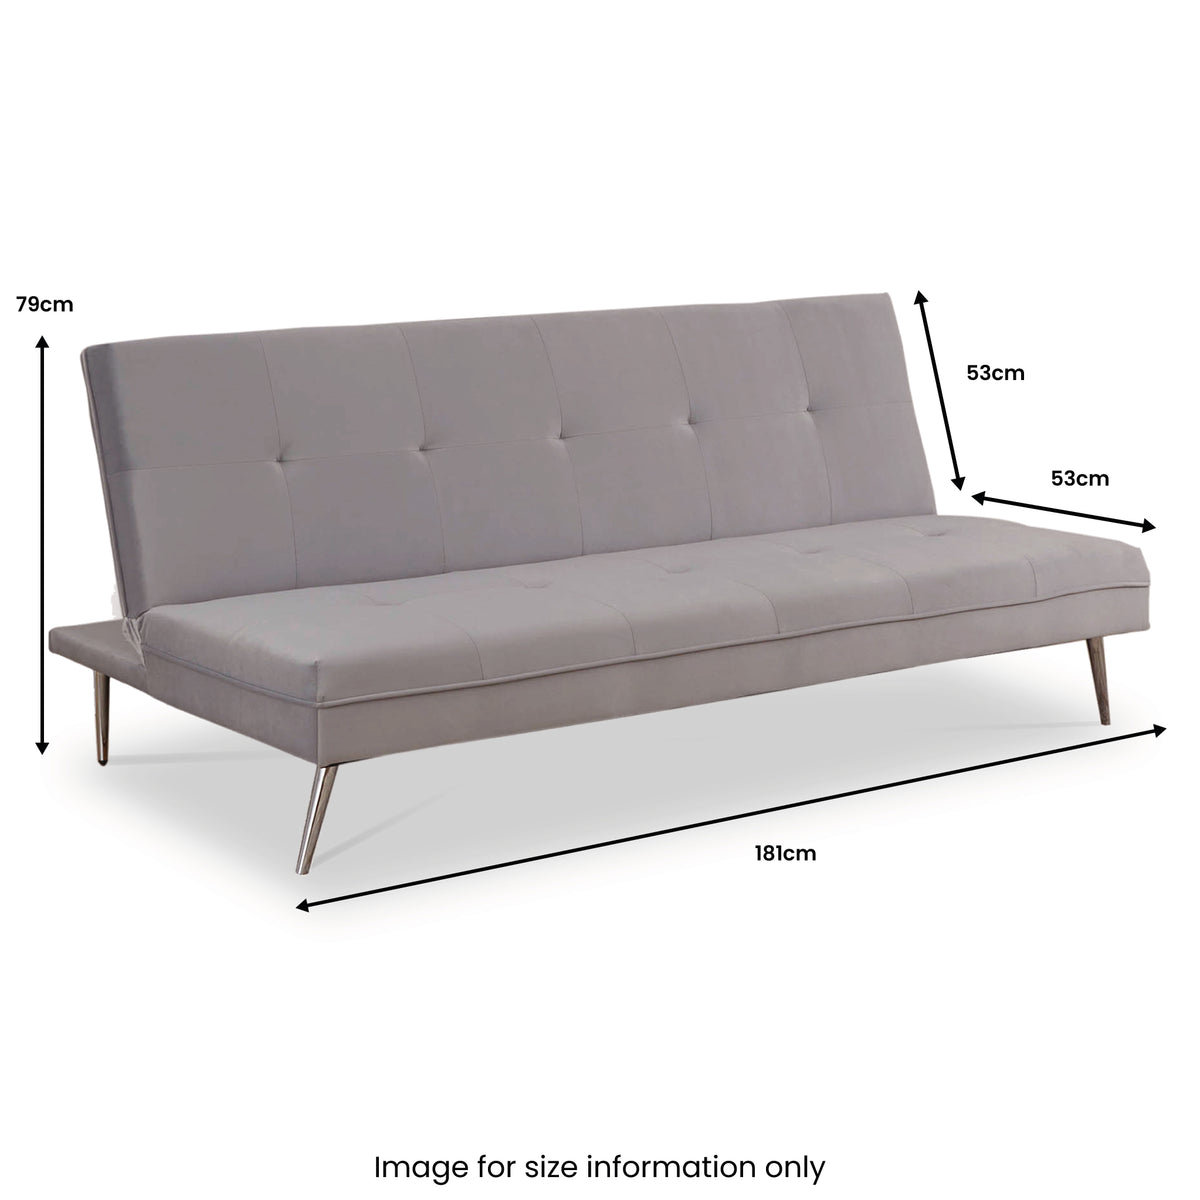 Sadie Click Clack Sofa Bed in Grey Dimensions by Roseland Furniture